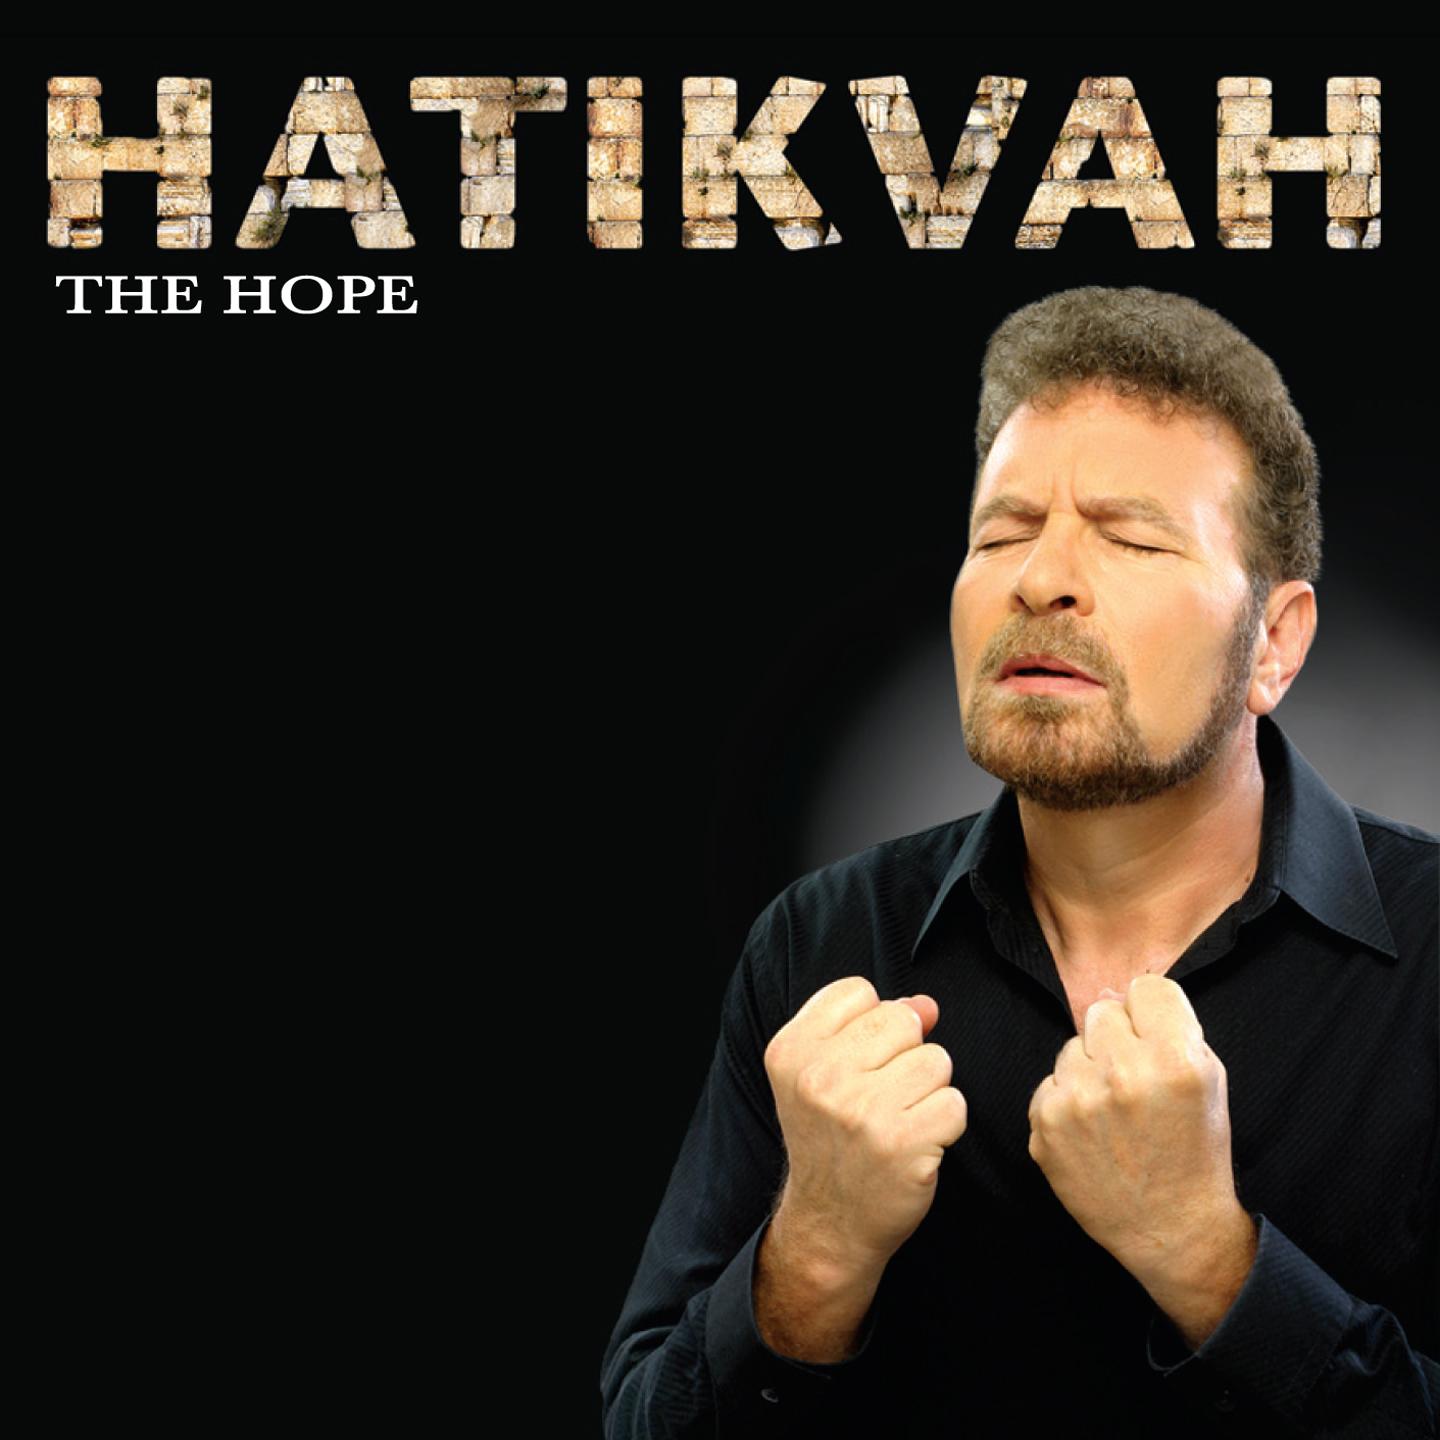 Постер альбома Hatikvah